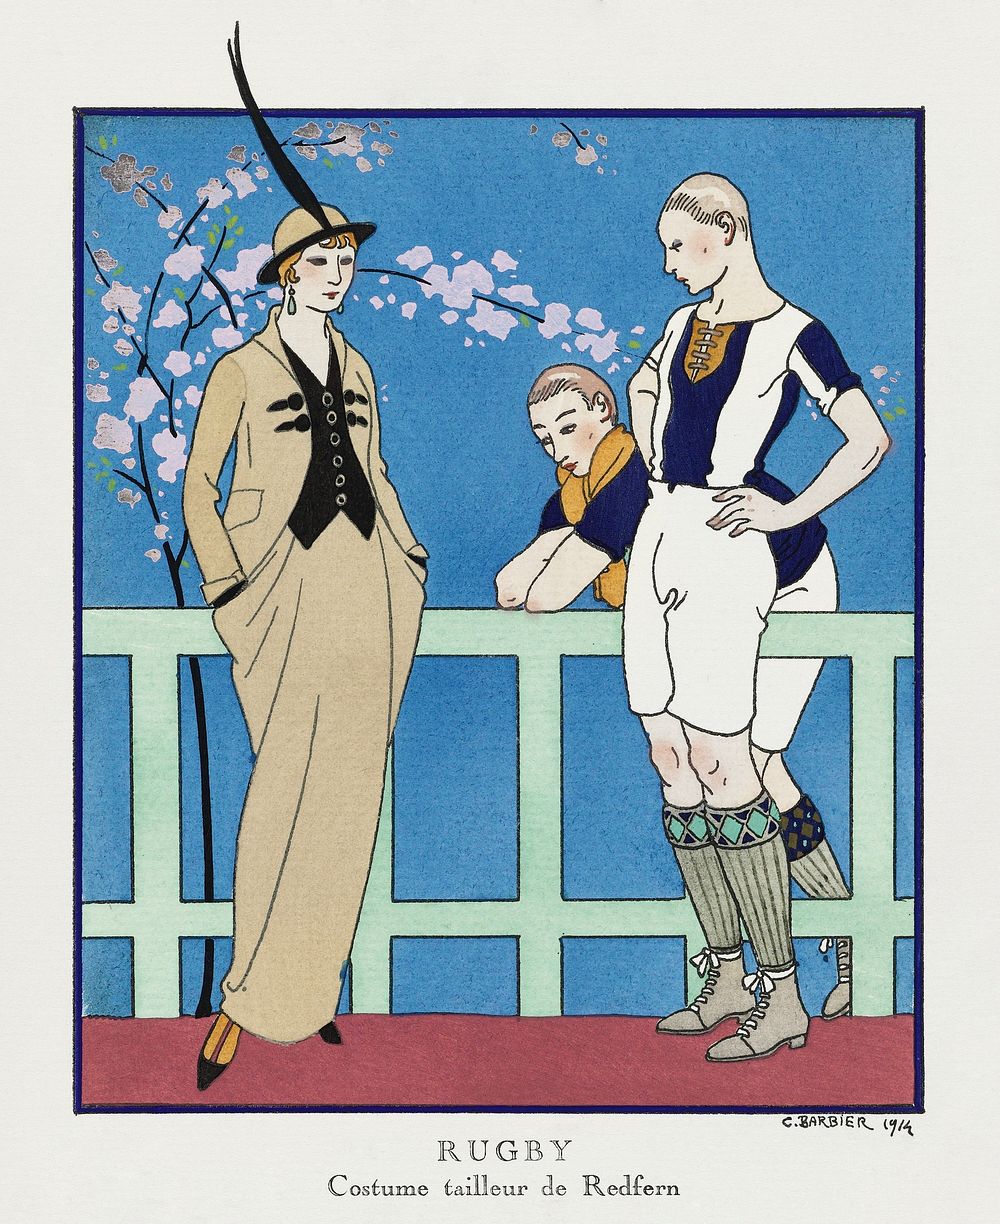 Rugby: Costume tailleur de Redfern from Gazette du Bon Ton No. 4 Pl. 39 (1914) fashion illustration in high resolution by…